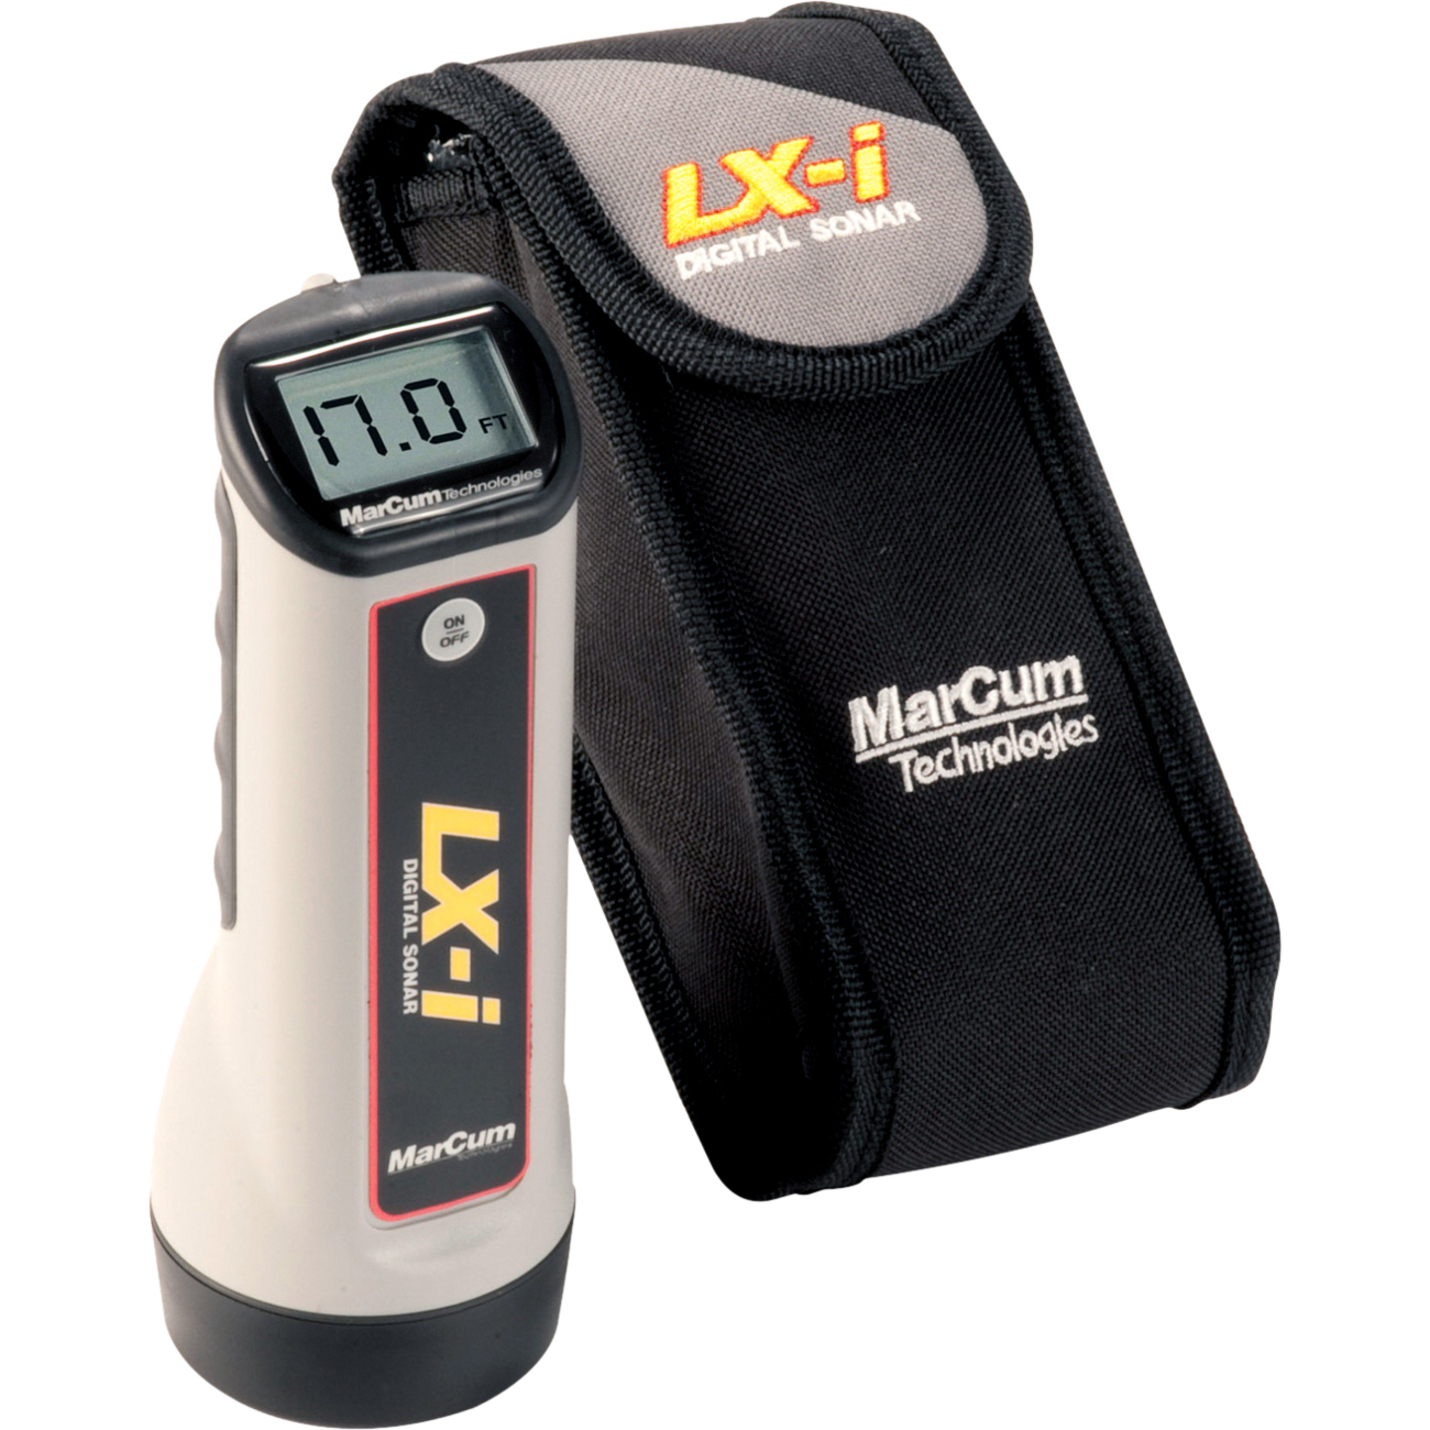 MarCum LX-i Digital Handheld Sonar - image 1 of 2